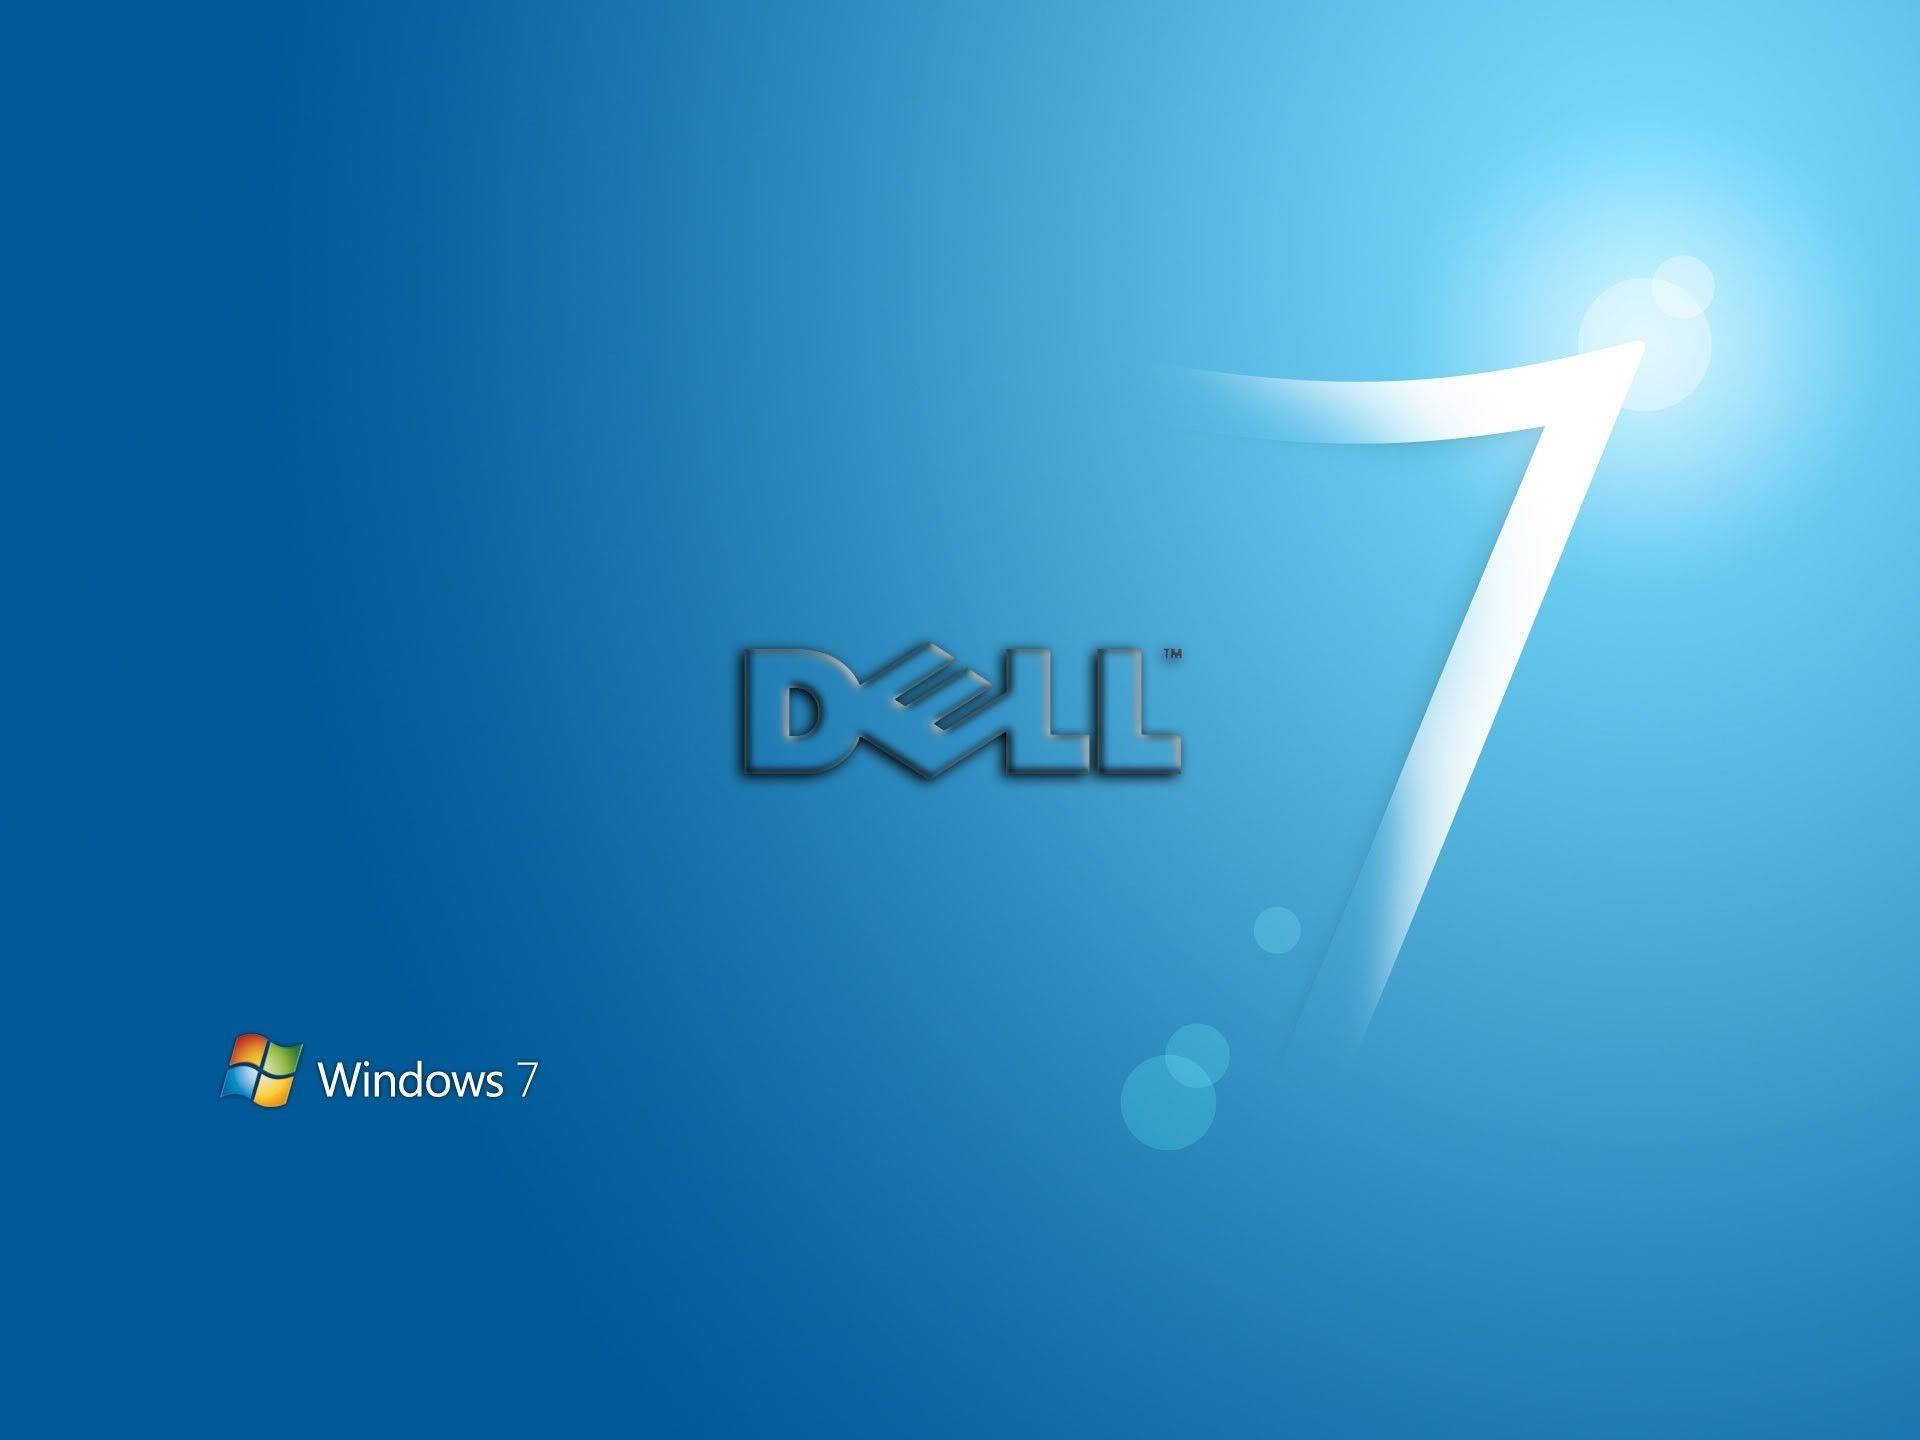 Best Dell Windows 7 Wallpaper FULL HD 1080p For PC Background